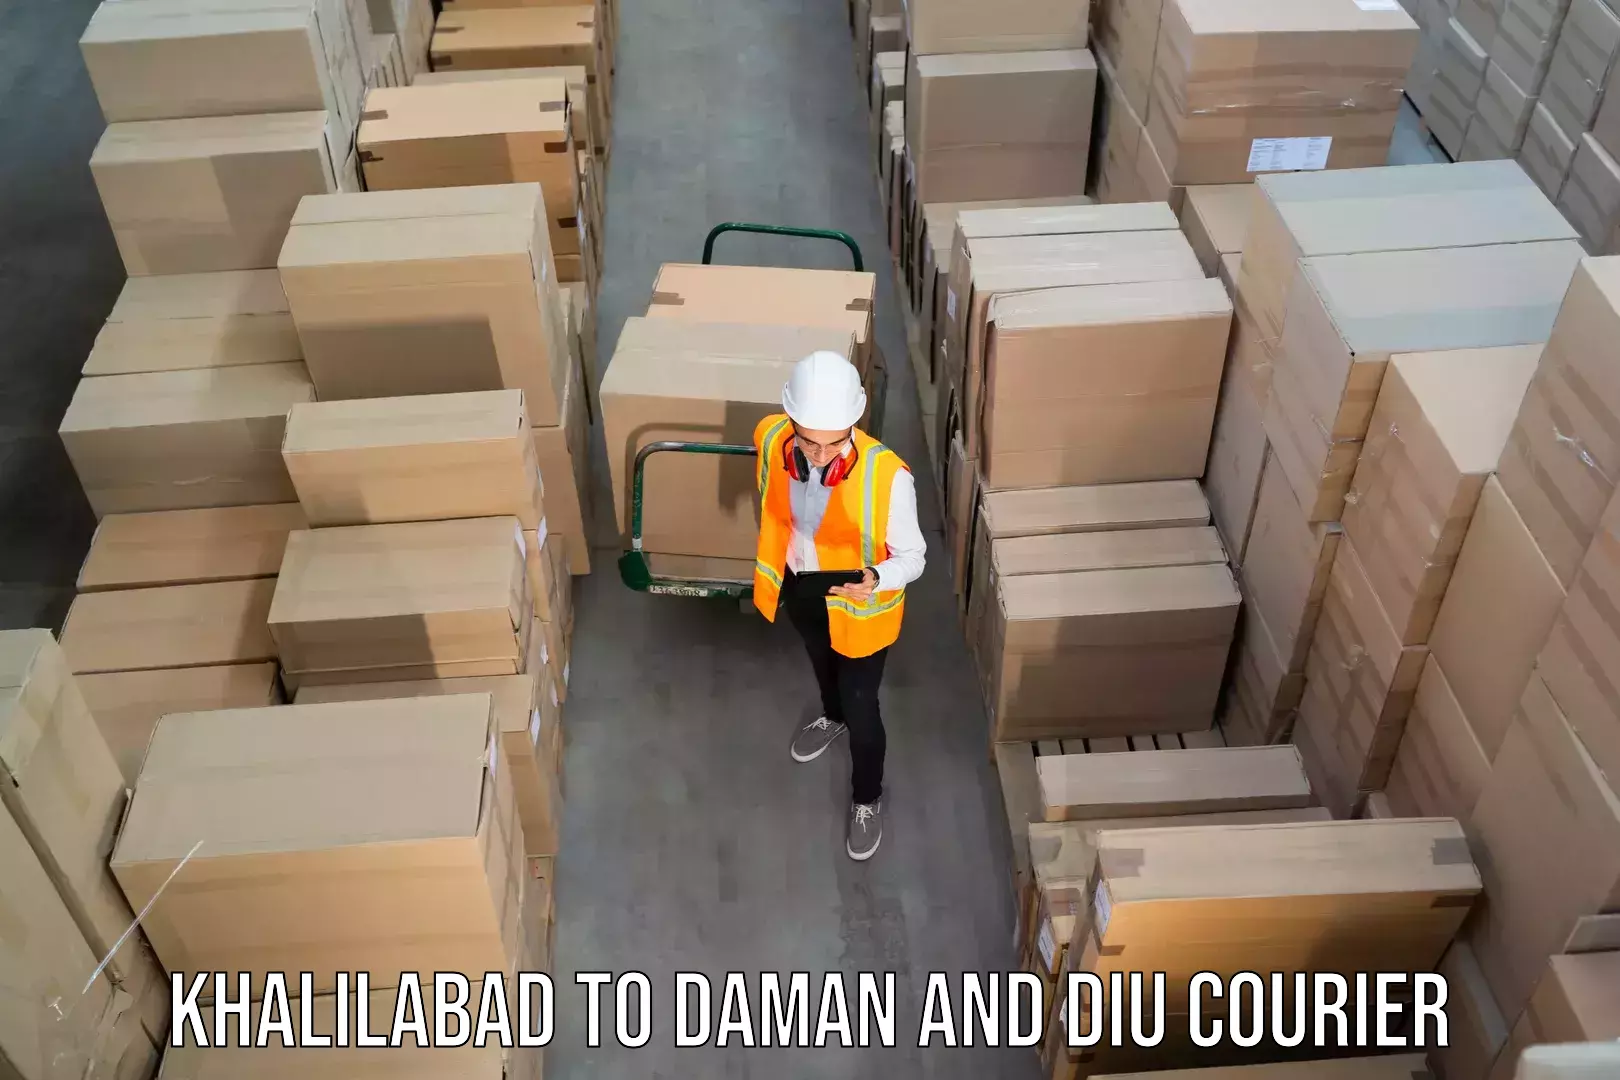 24/7 courier service Khalilabad to Daman and Diu